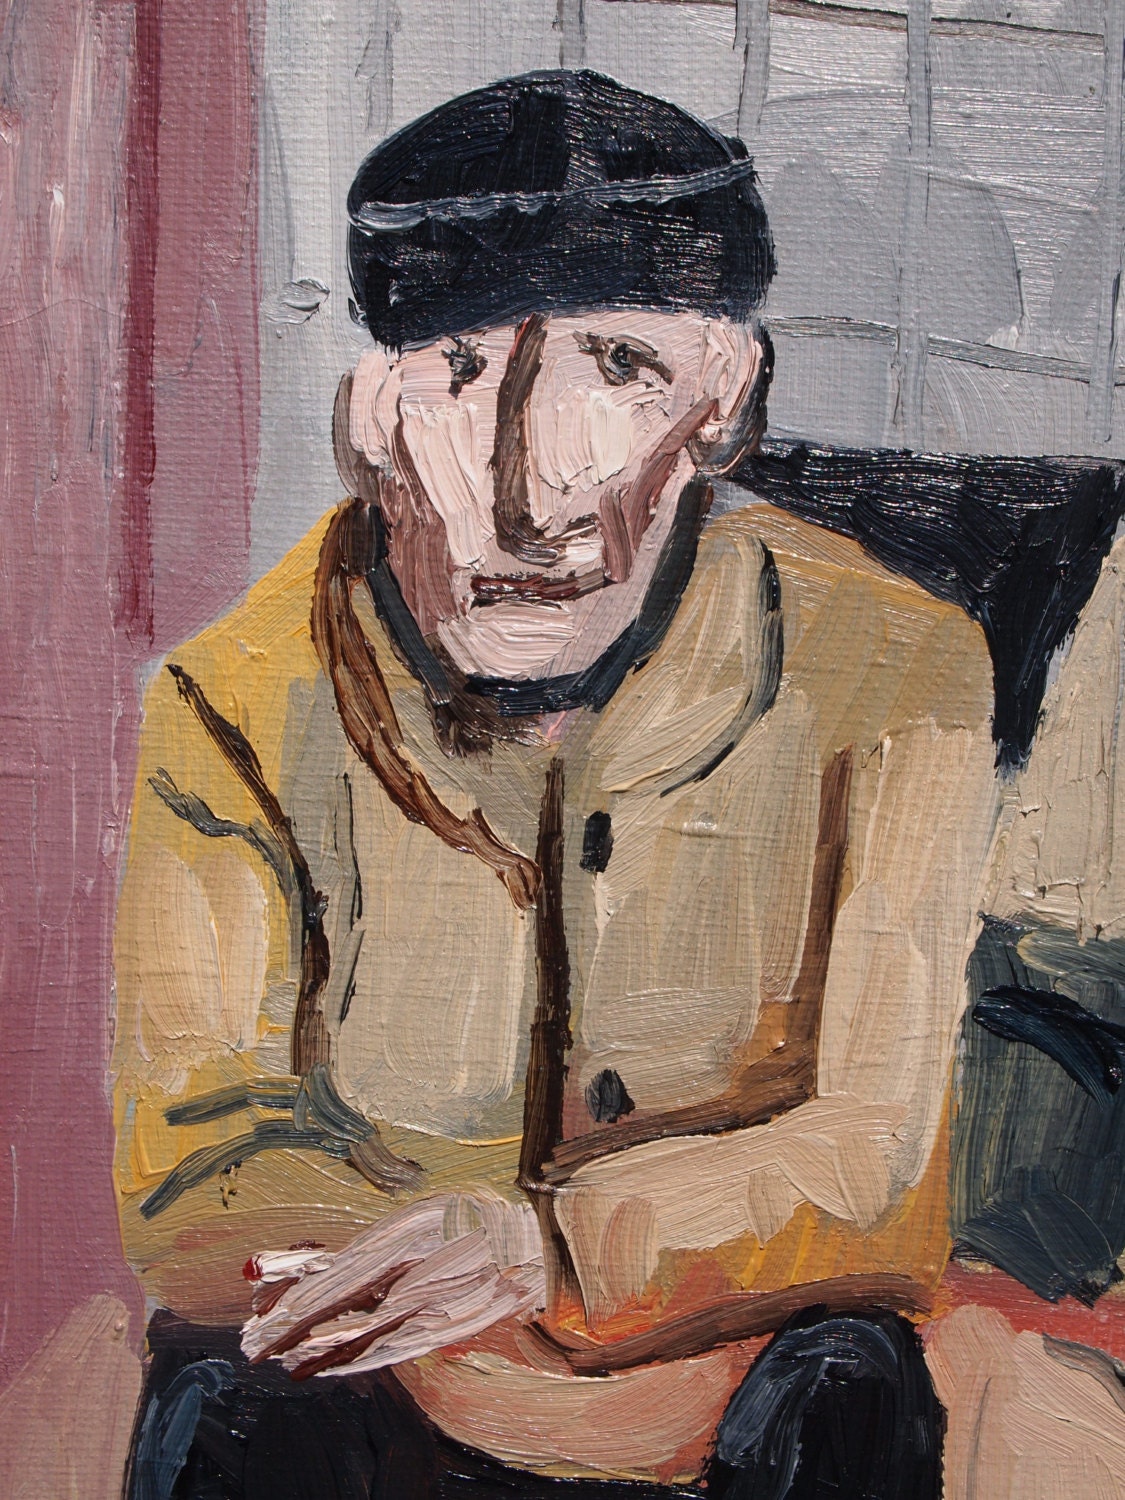 Homeless Men. Original Oil Painting. 16" x 20".